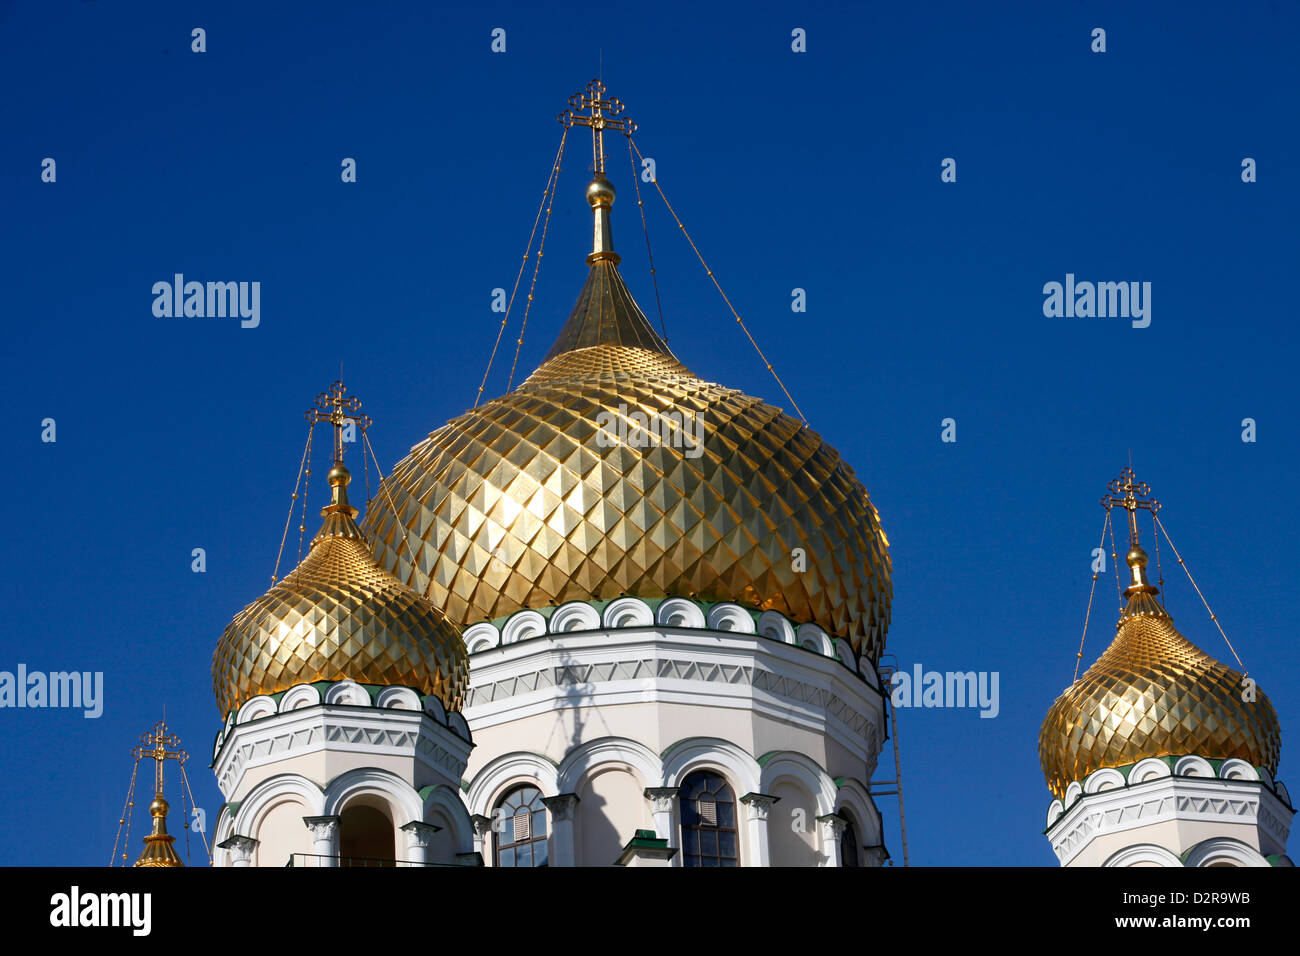 Eglise orthodoxe russe, Saint-Pétersbourg, Russie, Europe Banque D'Images